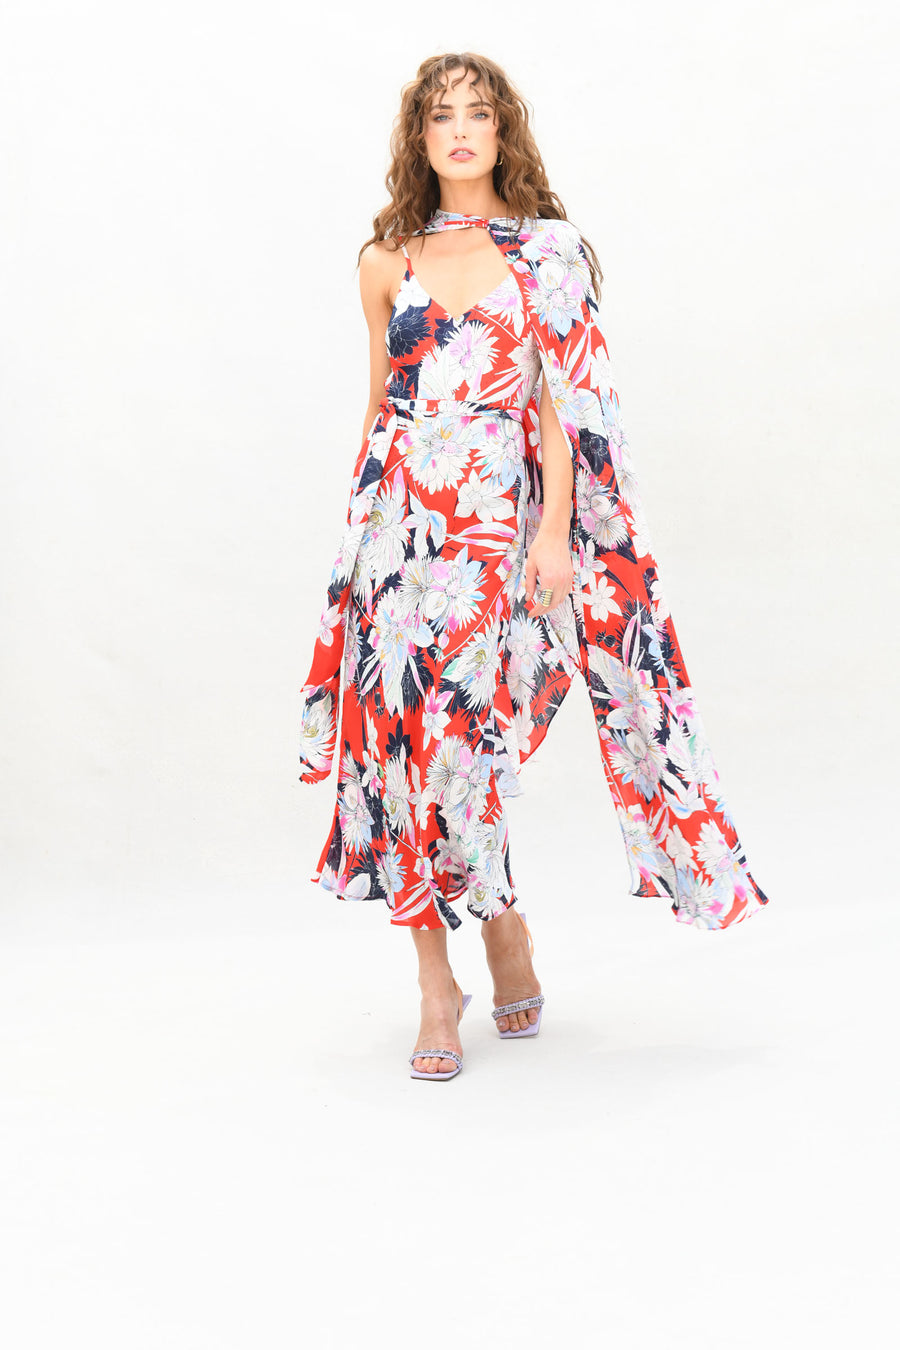 Capri Poncho and Bias Cut Slip Dress : Red w/ White Tropical Floral